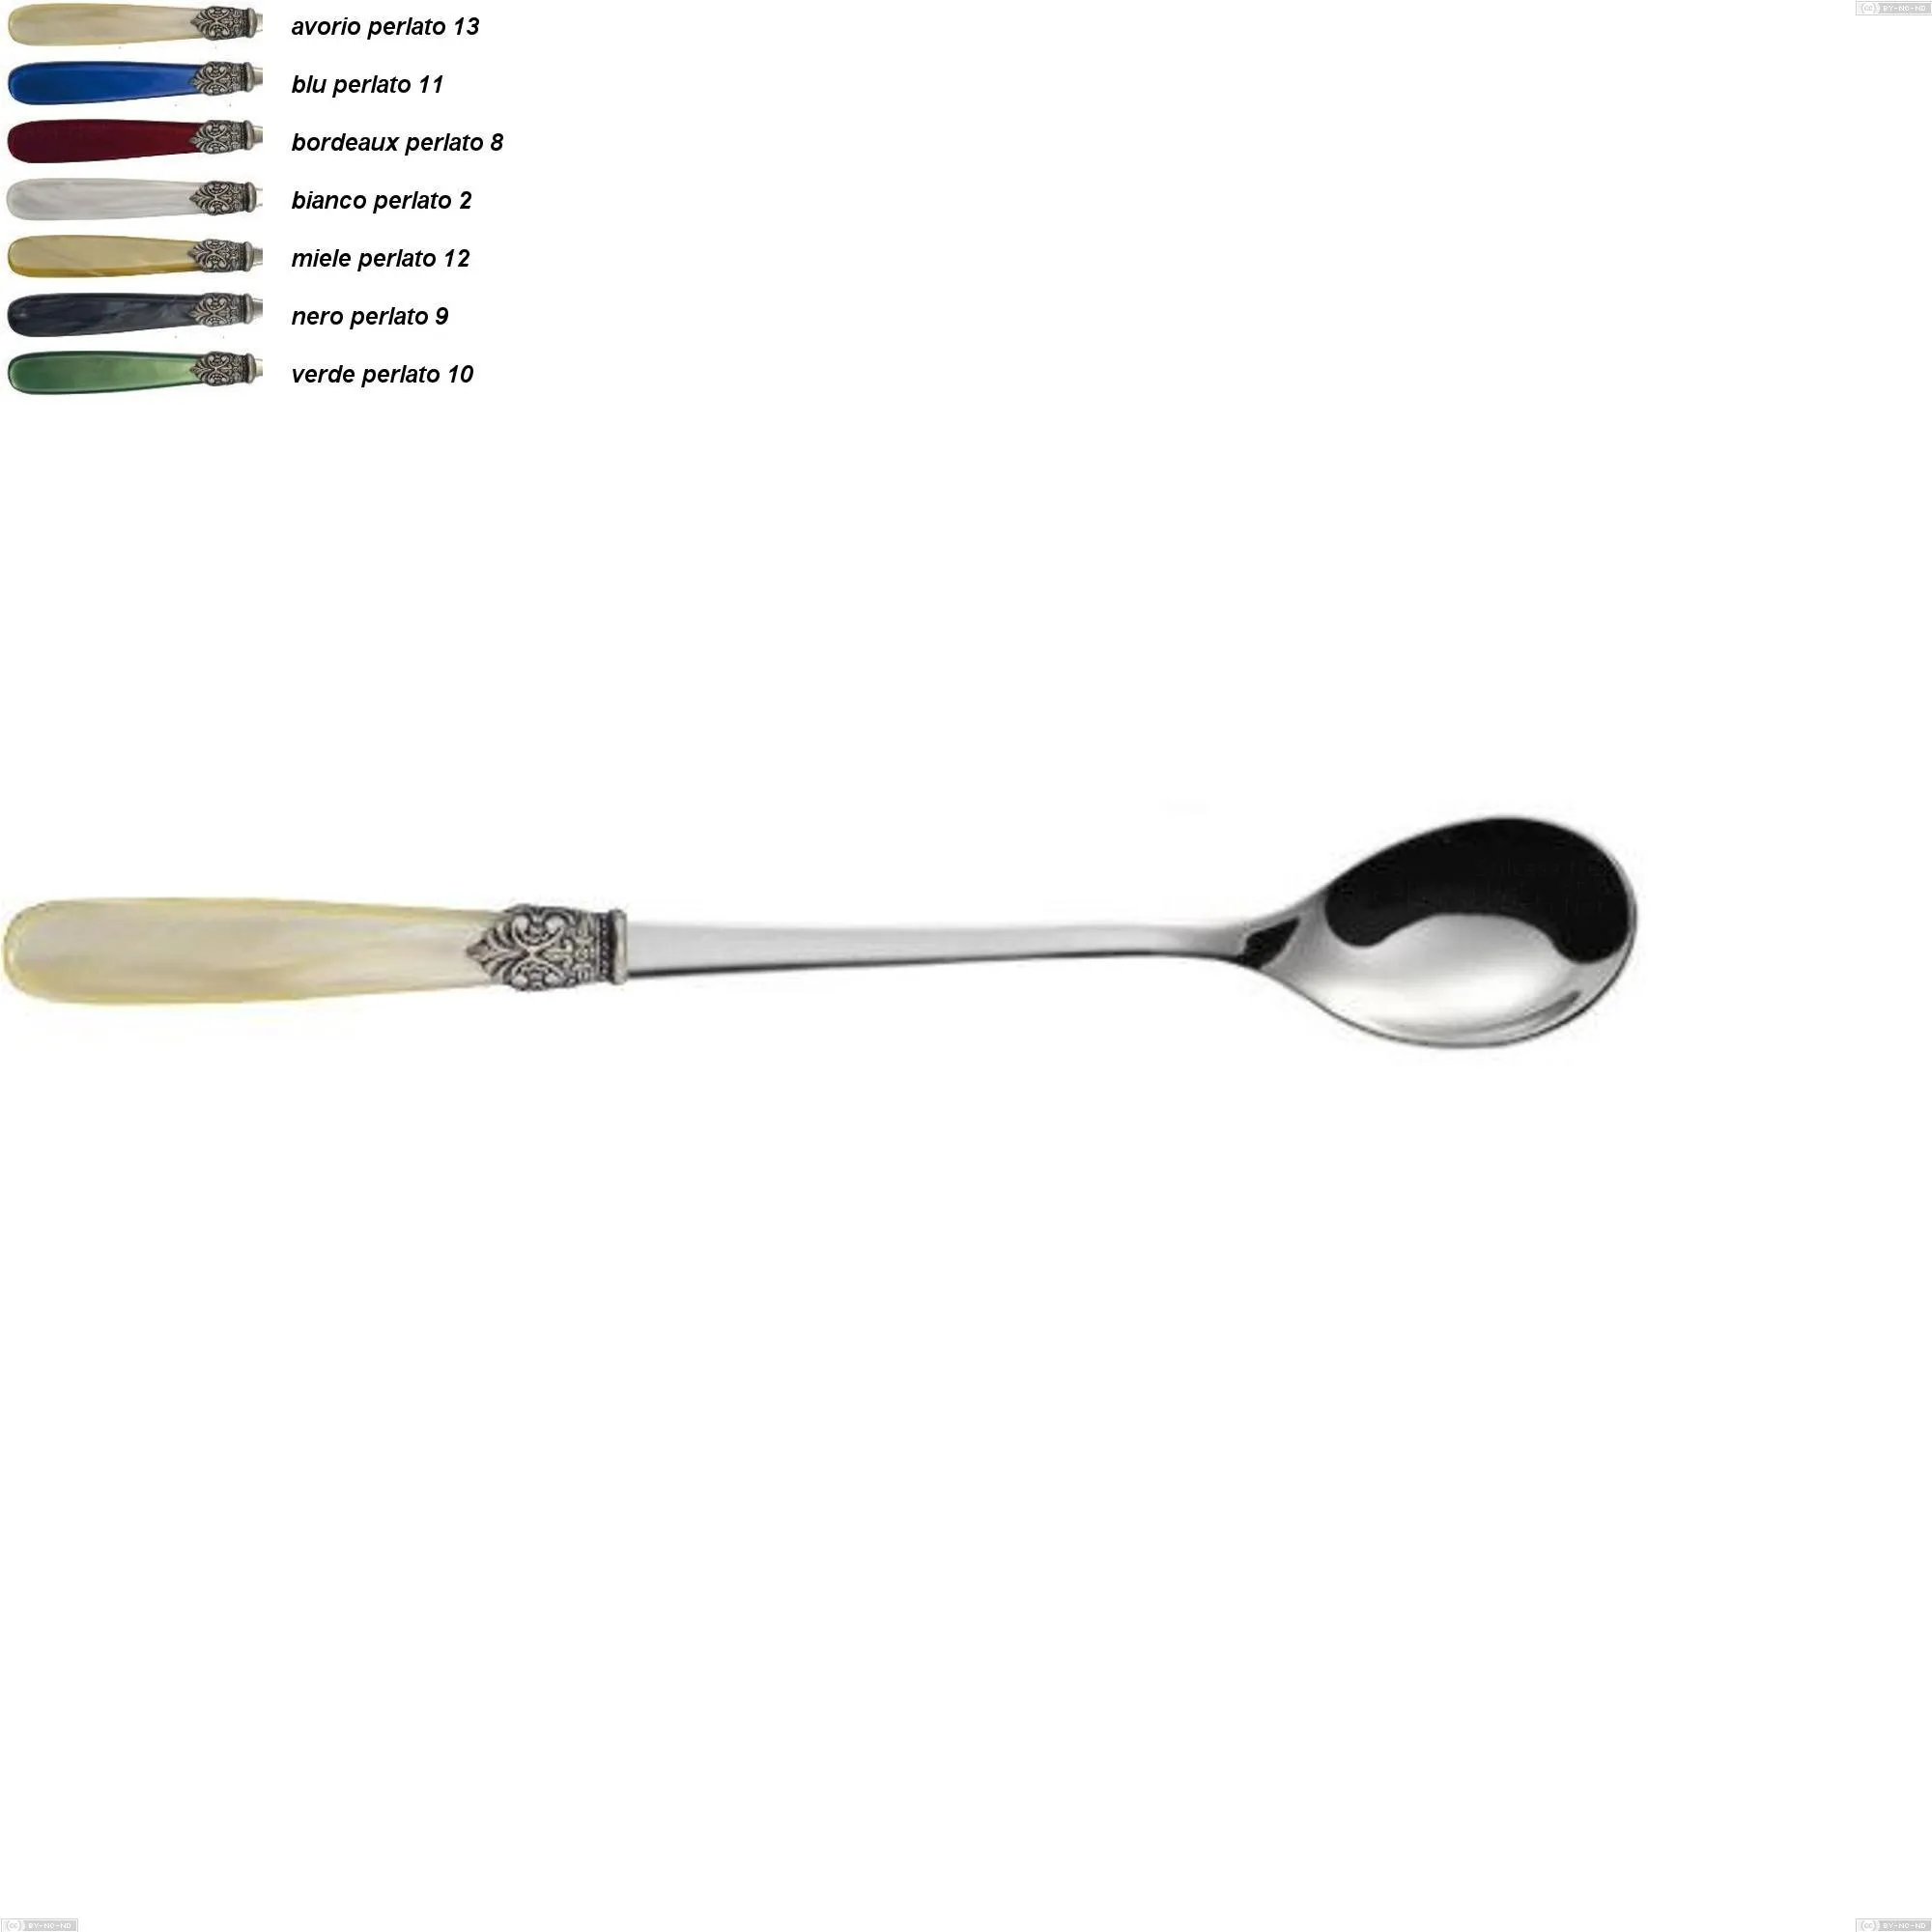 Cucchiaio bibita georgian, Acciaio 18/10 AISI 304 Lucido manicatura acrilico perlato, lunghezza 211 mm